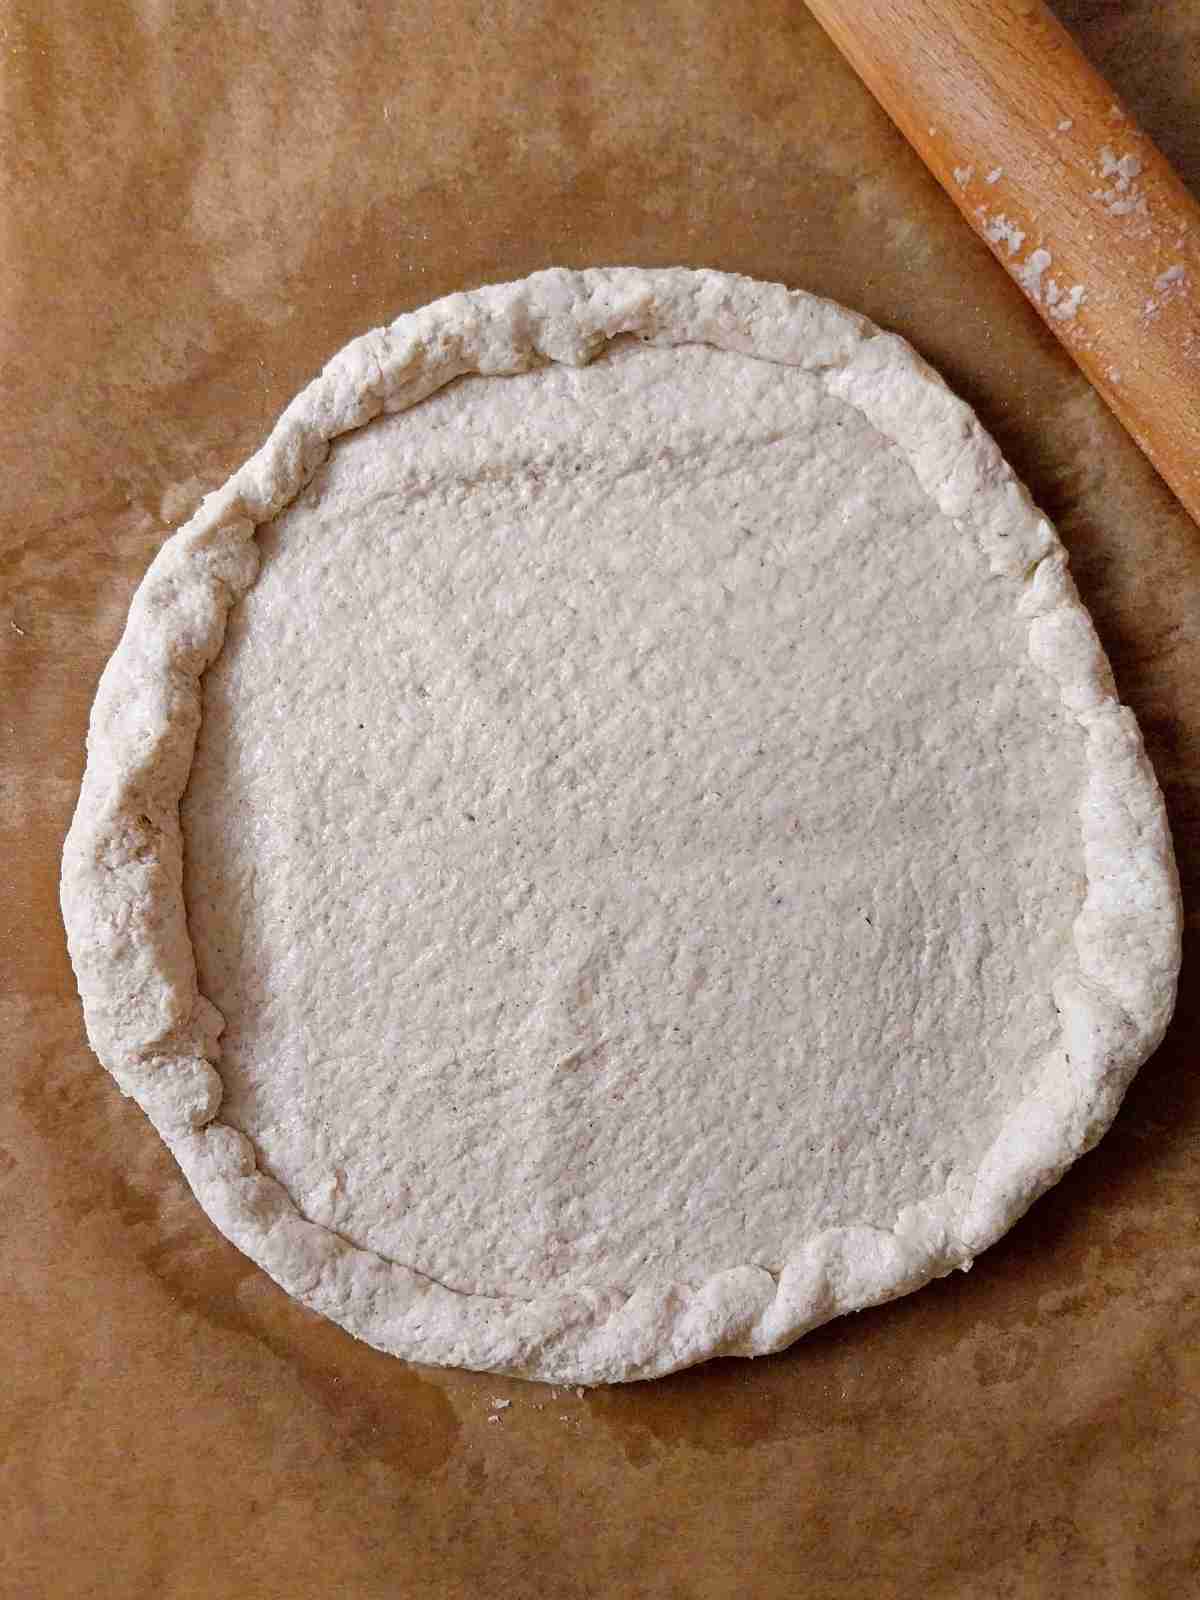 Sourdough pizza crust shaped into a circle on parchment paper.